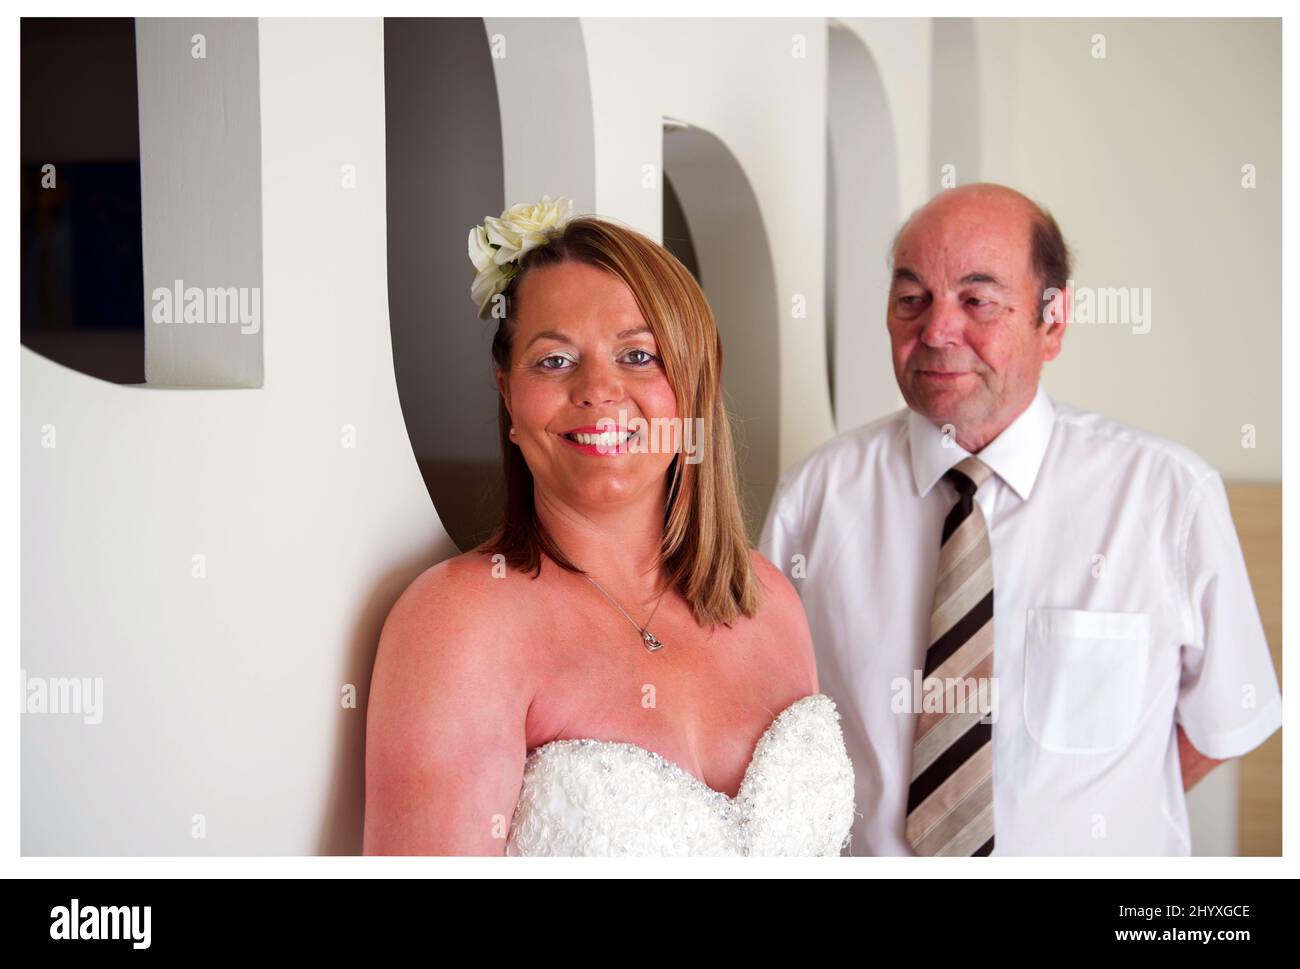 Funny bride photo Stock Photo